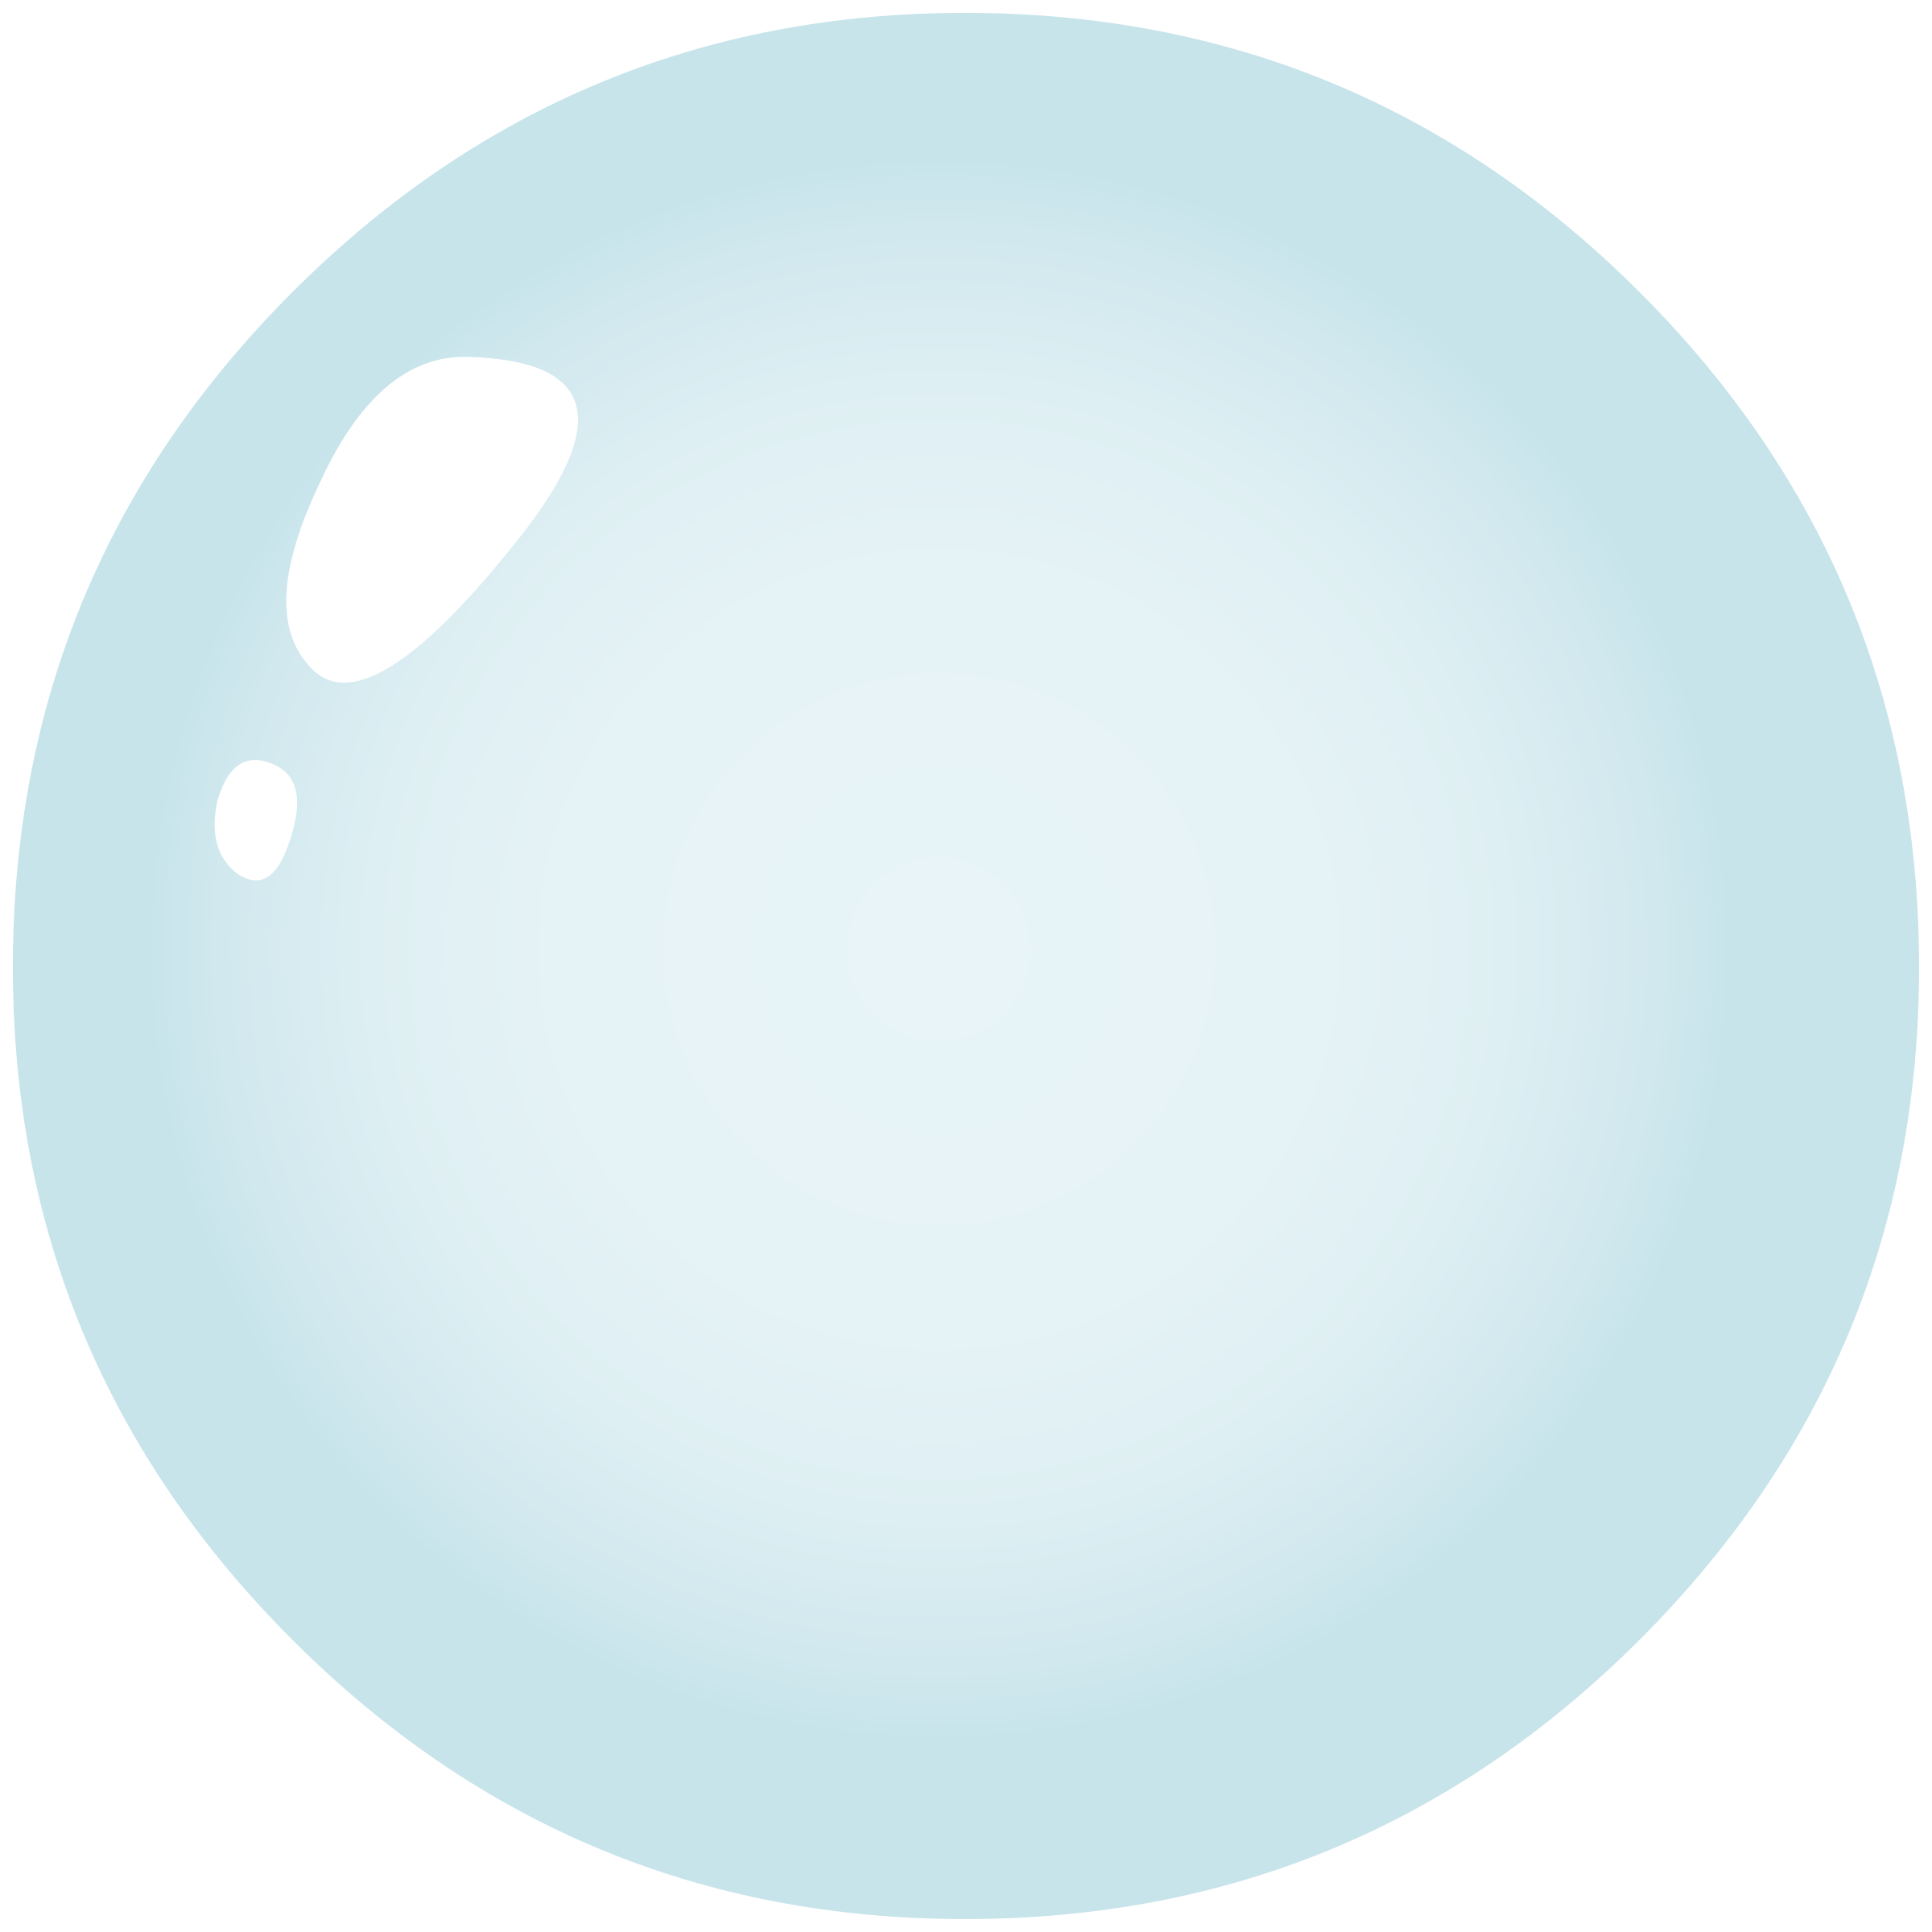 Food bubble big image. Clipart circle plain